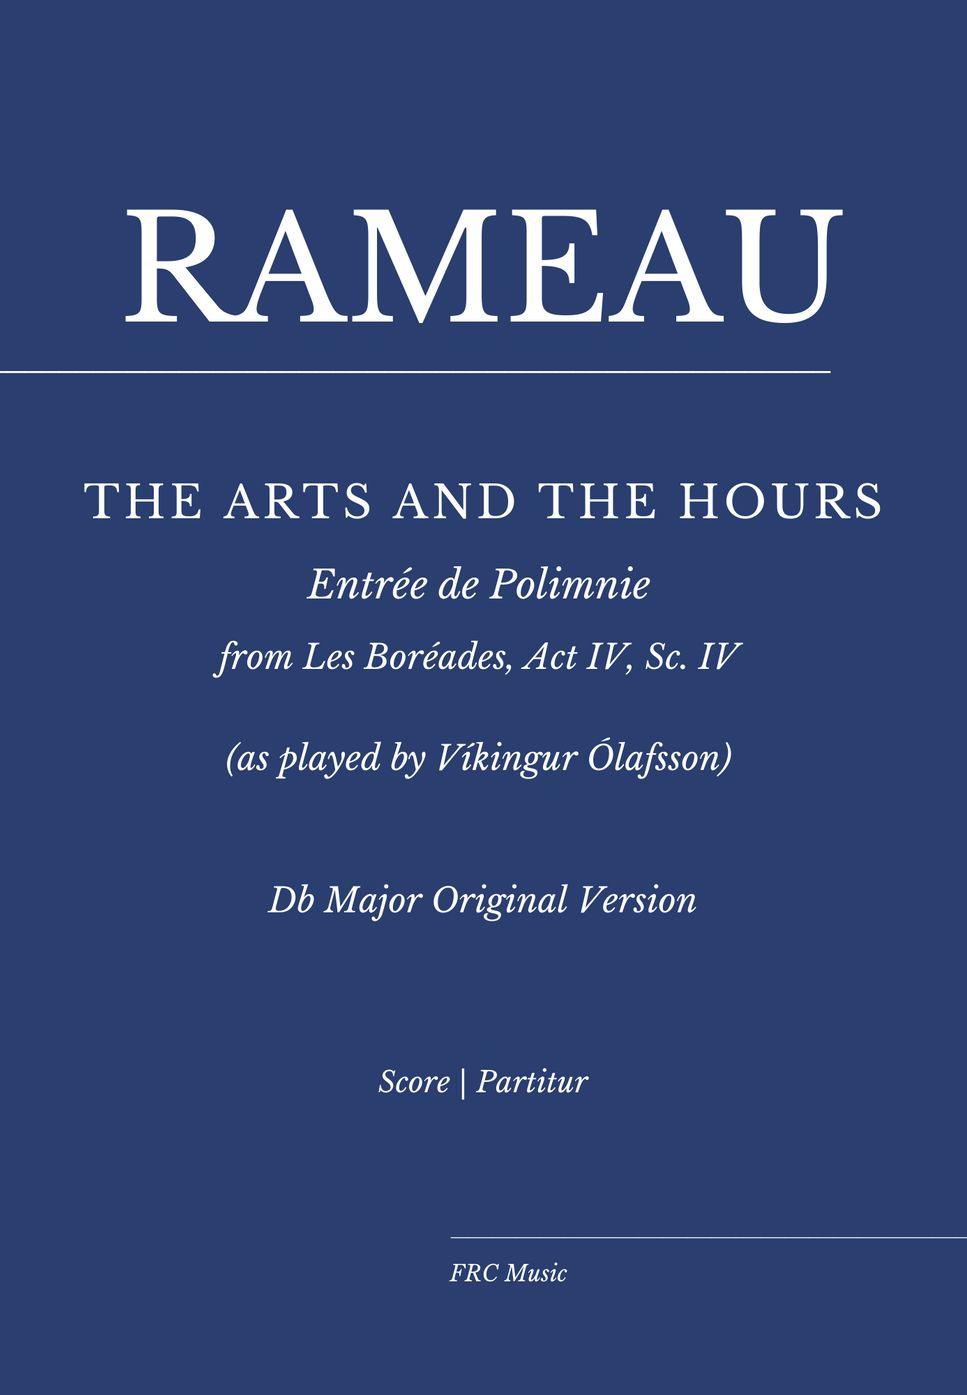 Víkingur Ólafsson - Rameau: Les Boréades: "The Arts and the Hours" (as played by Víkingur Ólafsson) Db MAJOR (ORIGINAL) by Flavio Regis Cunha